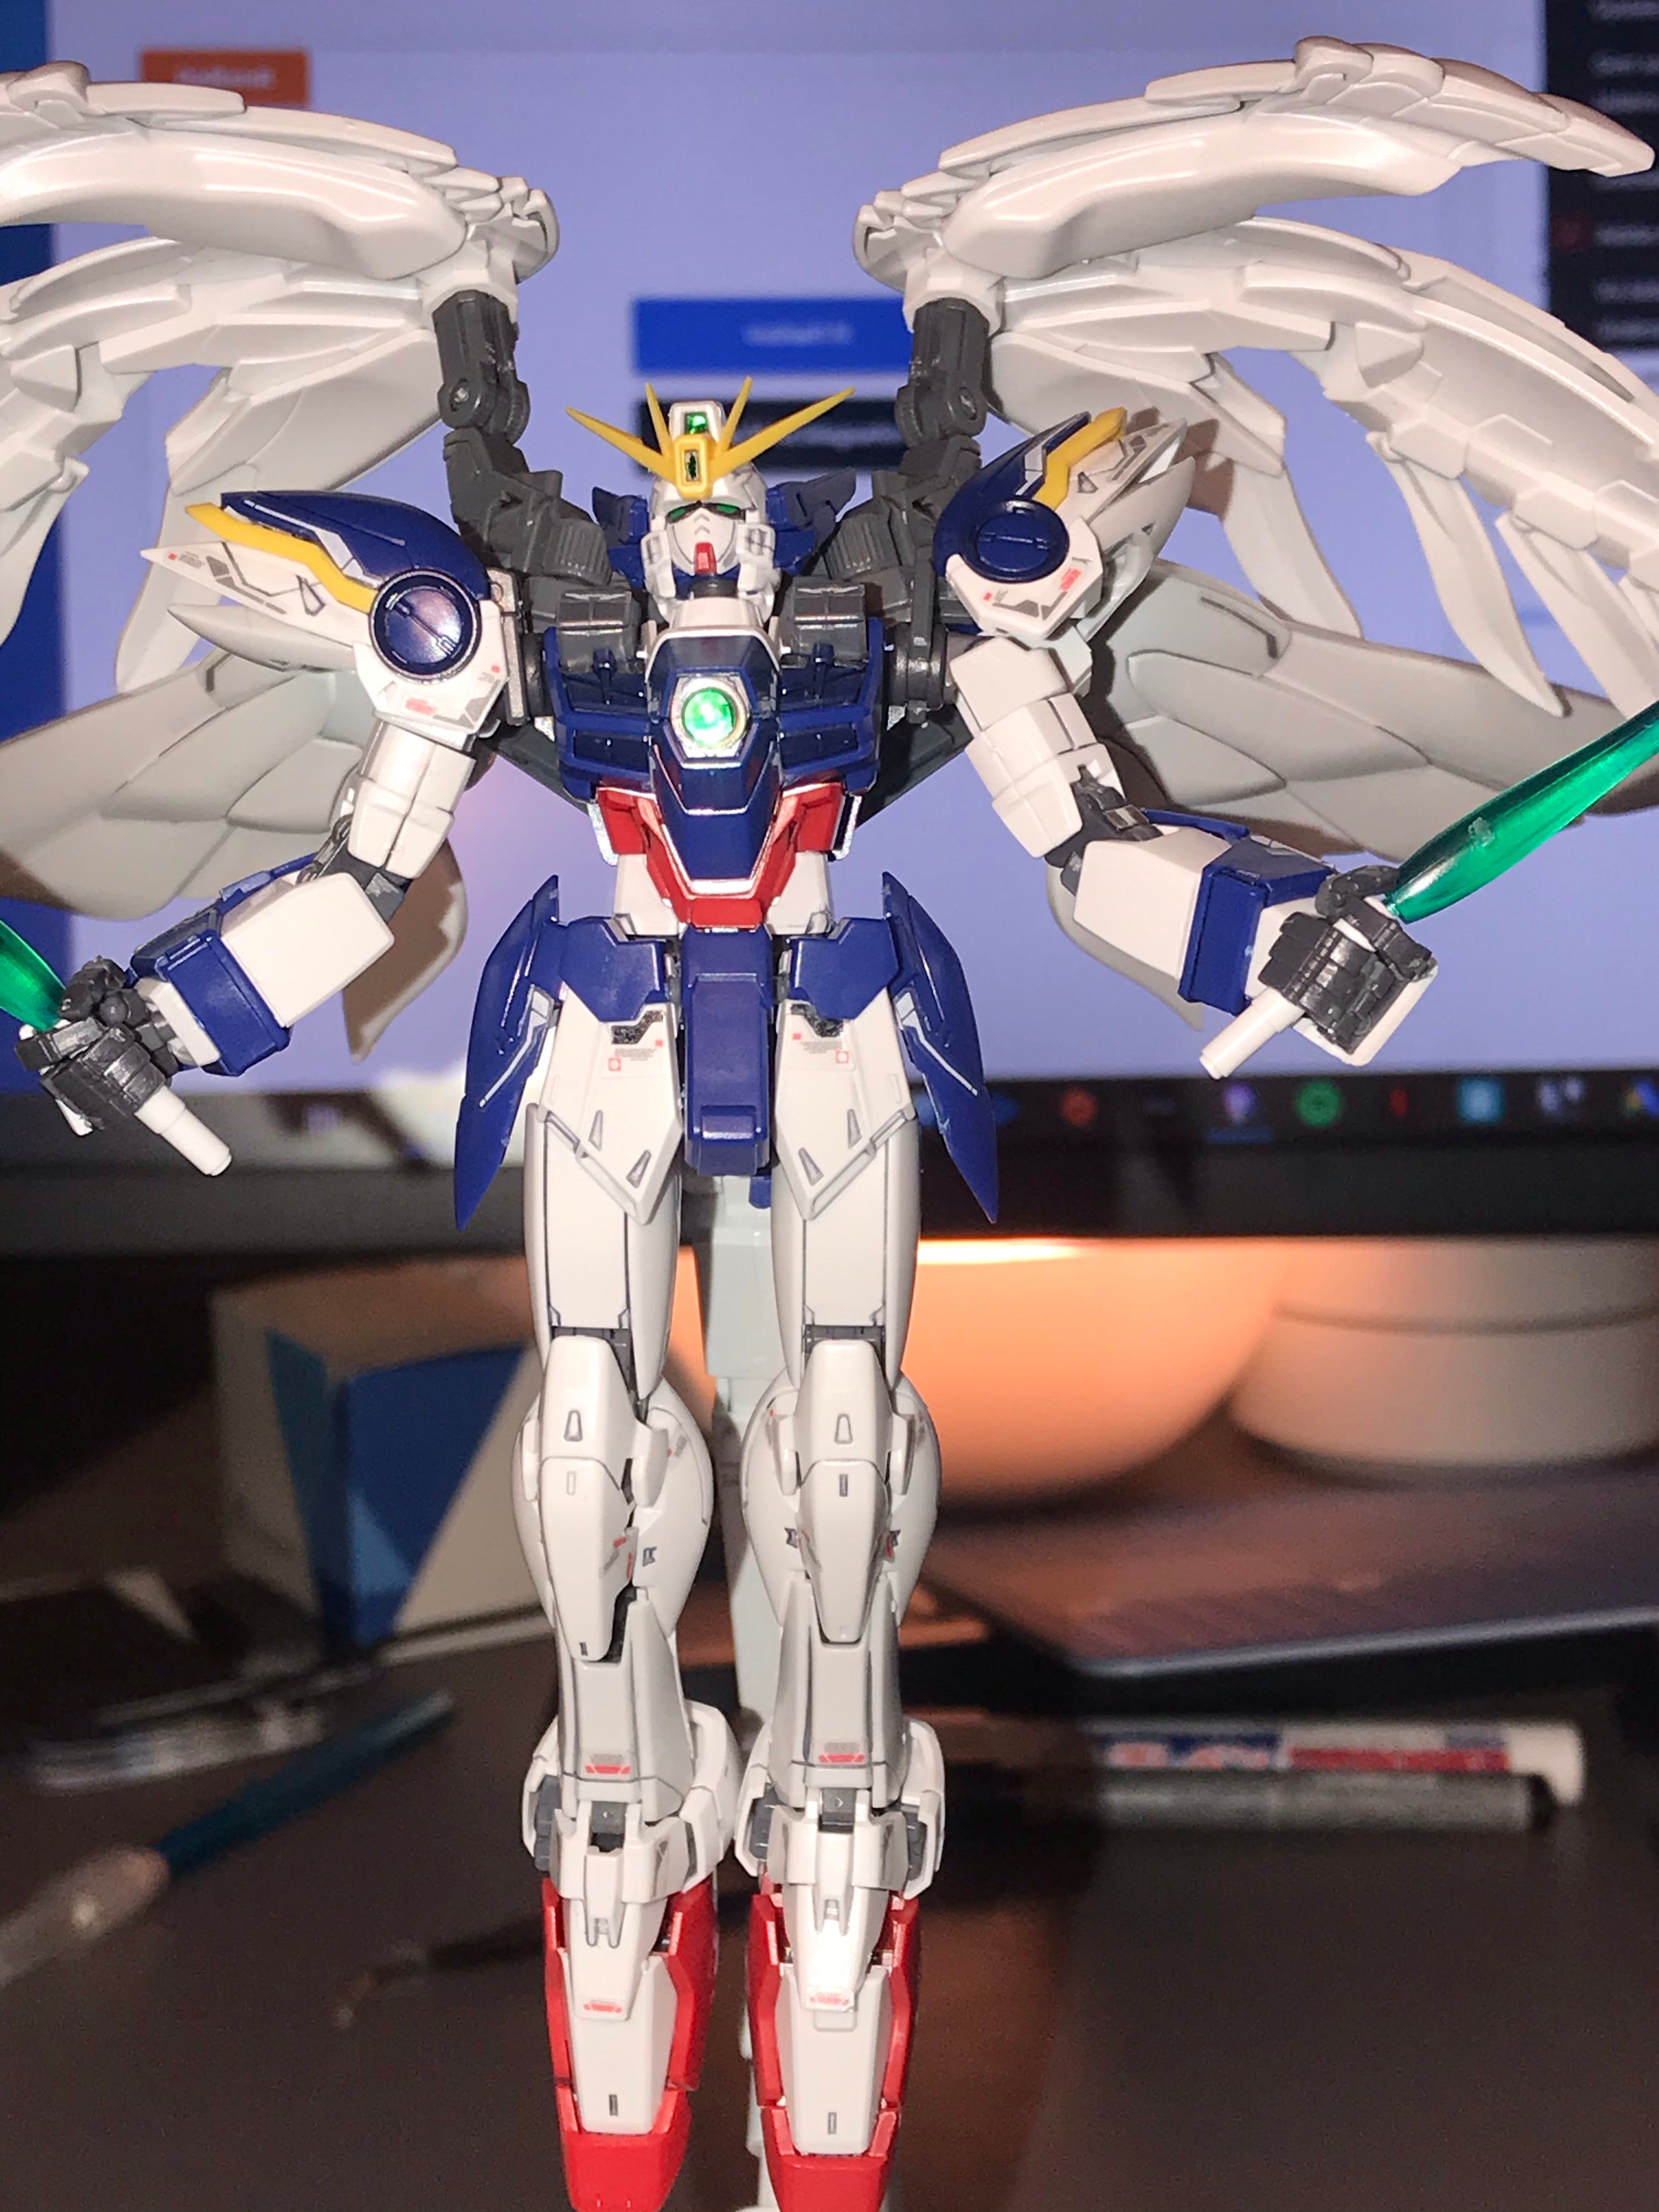 Gundam Marker Set - Pour Type til Panel Lining - gundam-store.dk